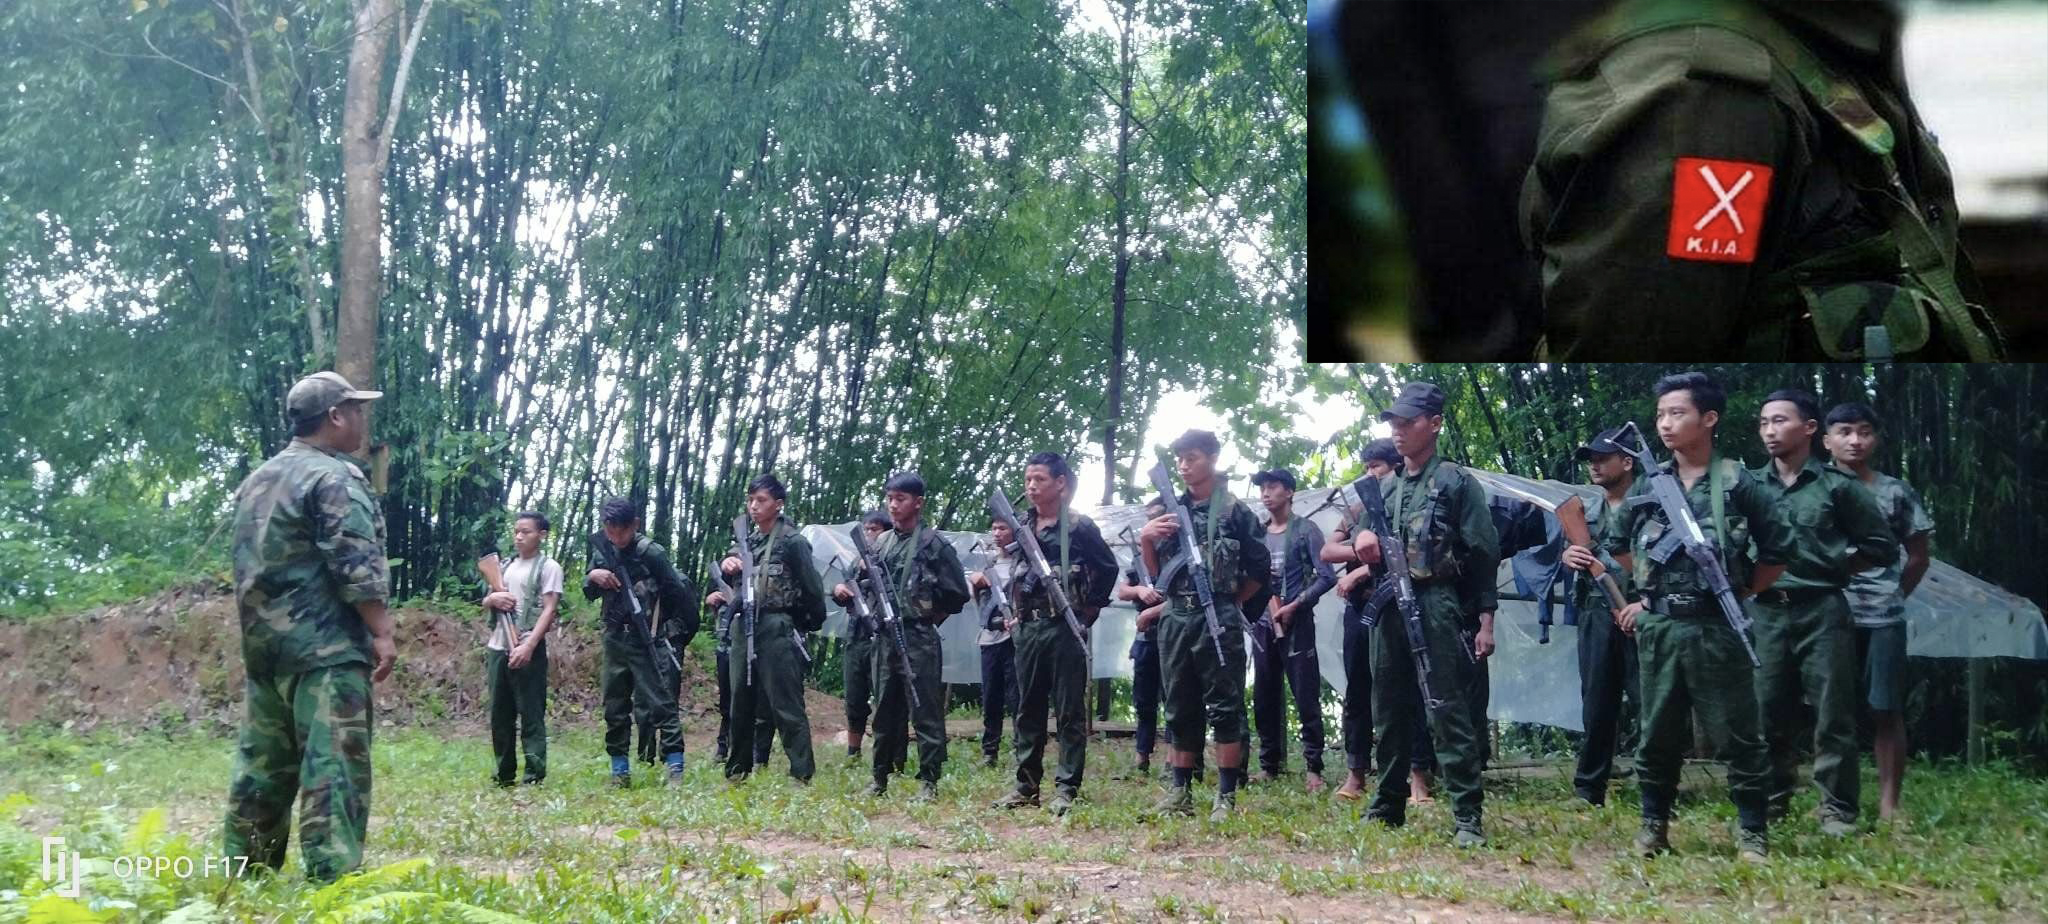 KIA arrests Naga youths more and more